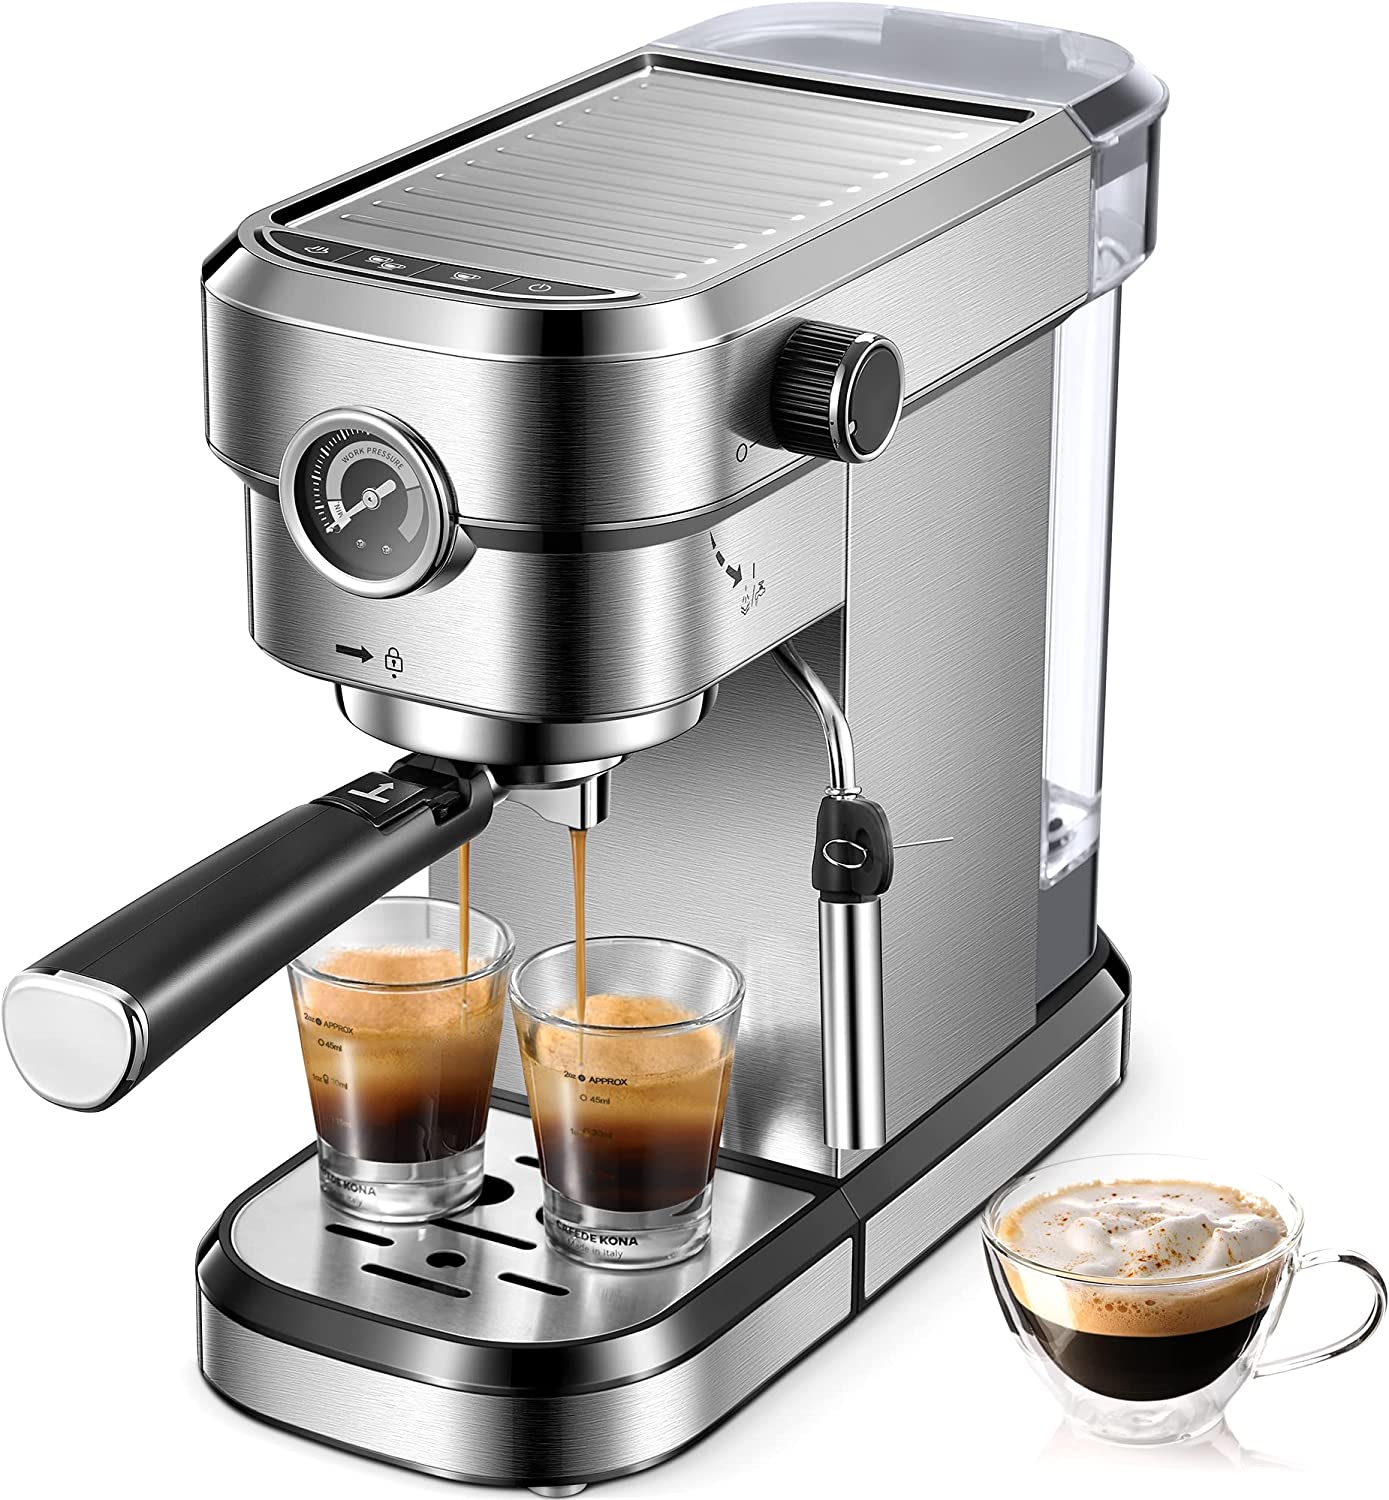 Review of Yabano Espresso Machine, 15 Bar Fast Heating Espresso Coffee machine